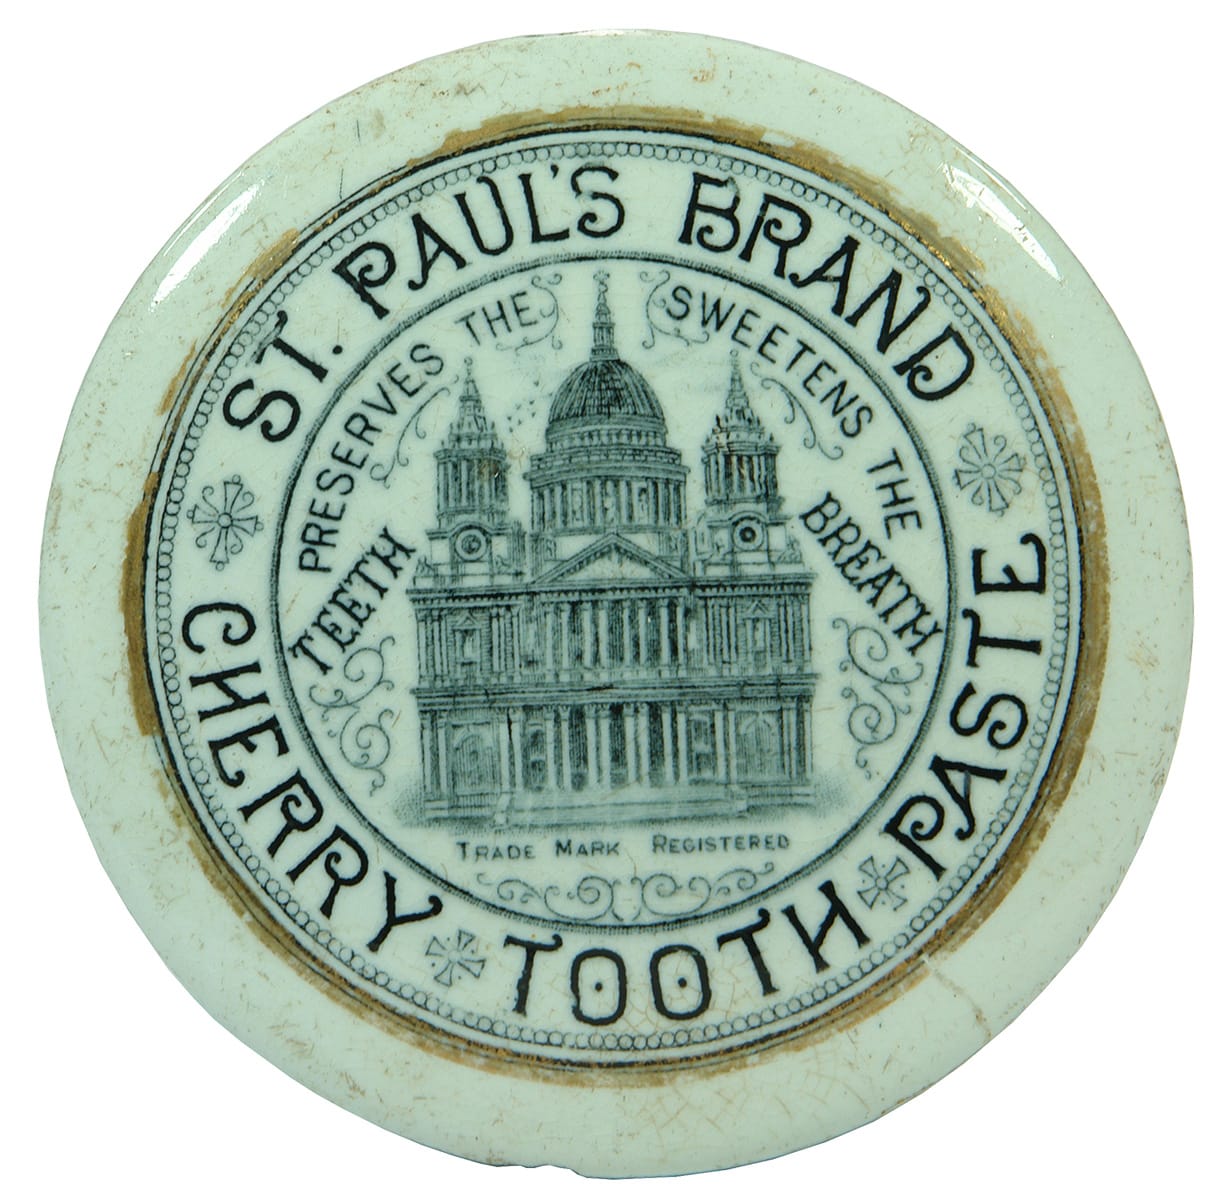 St Paul's Brand Cherry Tooth Paste Pot Lid